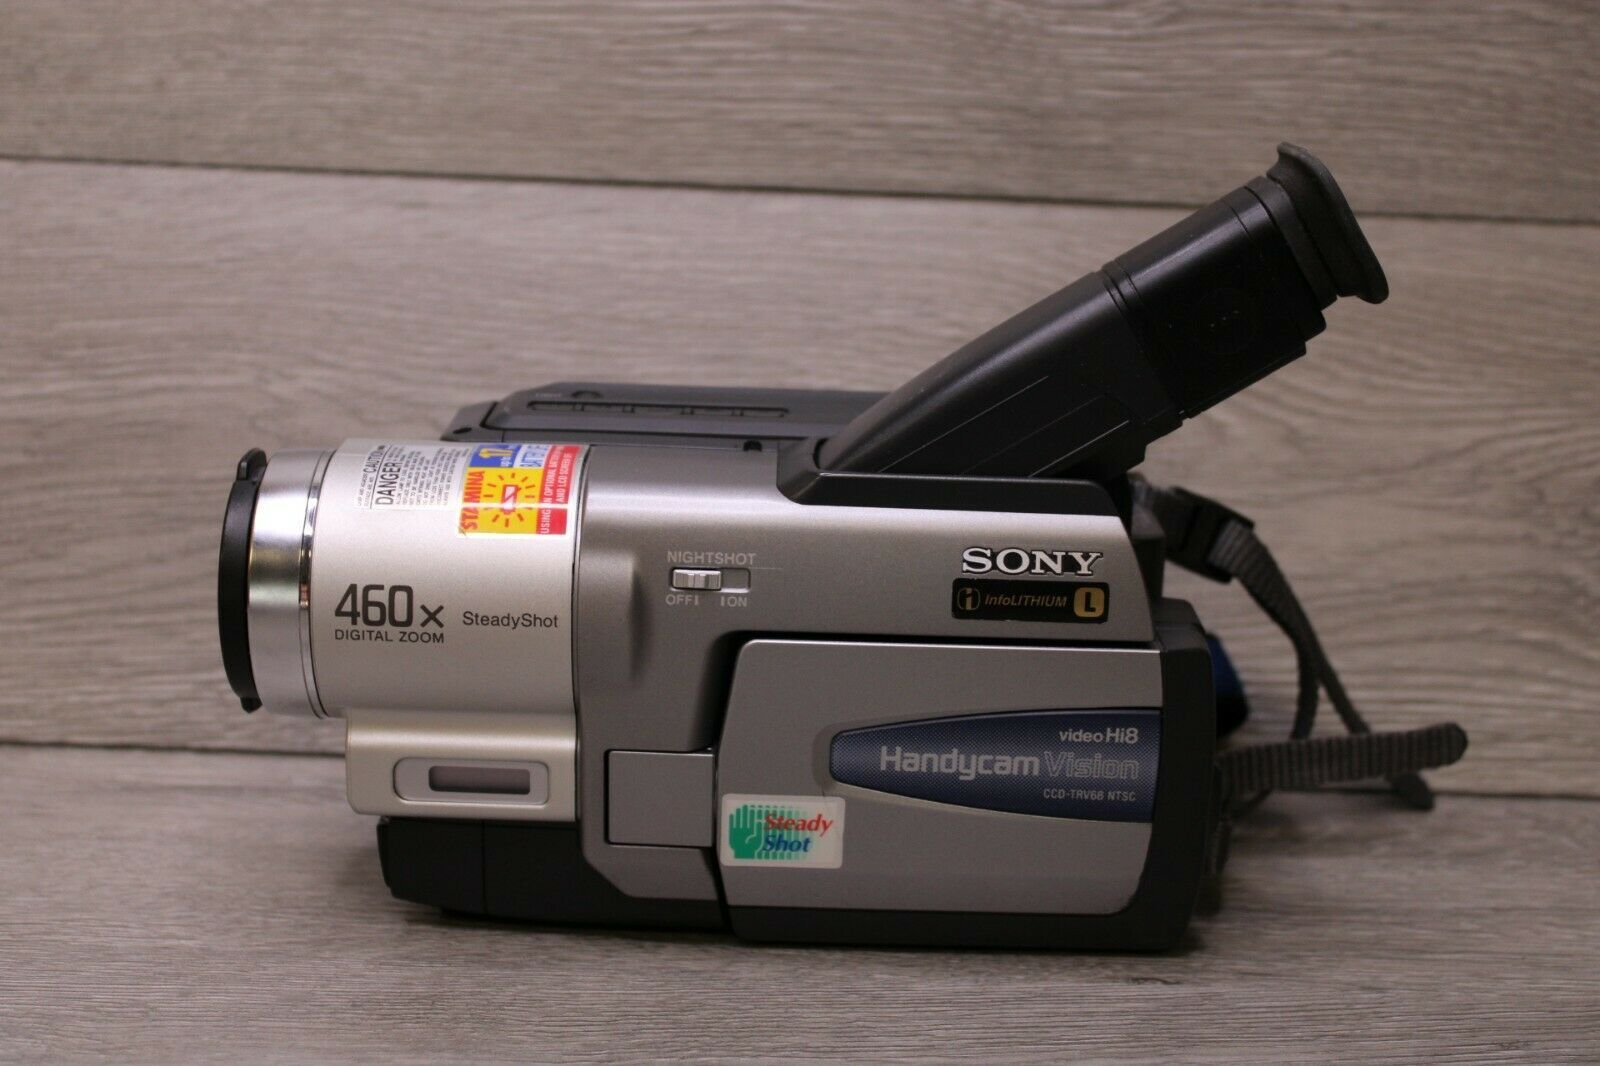 Sony Handycam Vision Video Hi8 CCD-TRV68 NTSC Steady Shot 460x Zoom